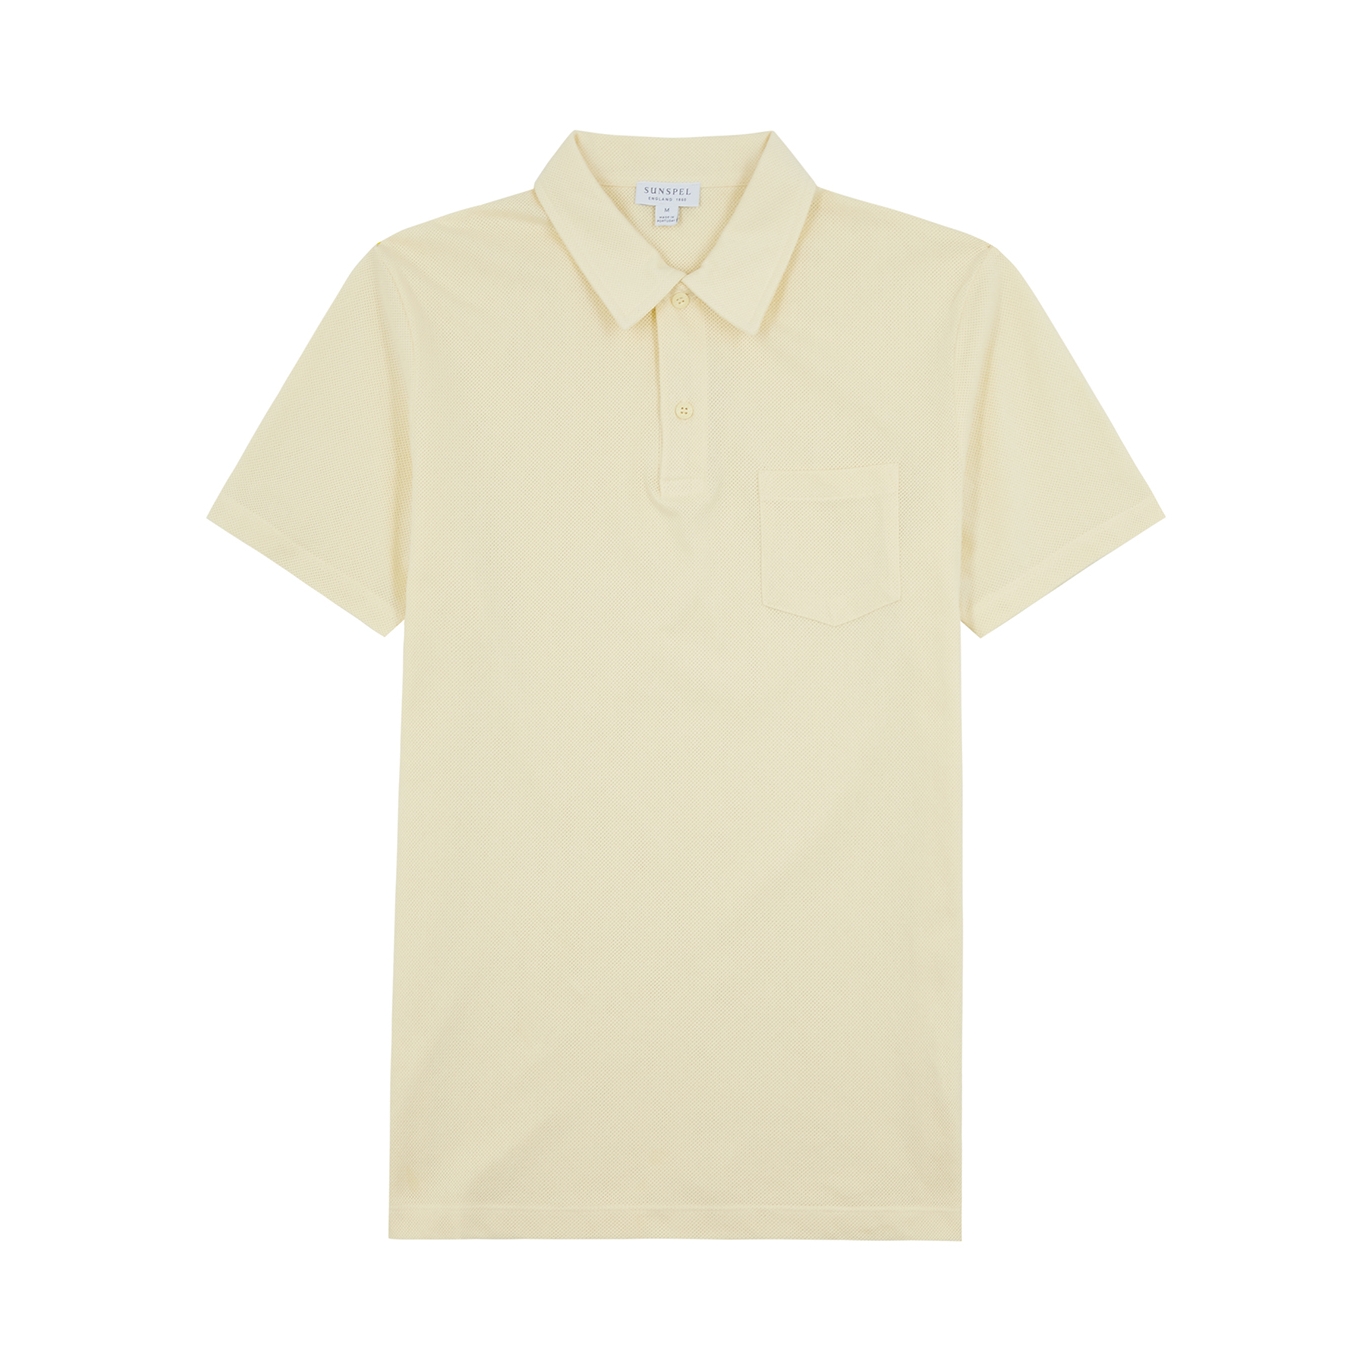 Sunspel Riviera Yellow Cotton-mesh Polo Shirt - S